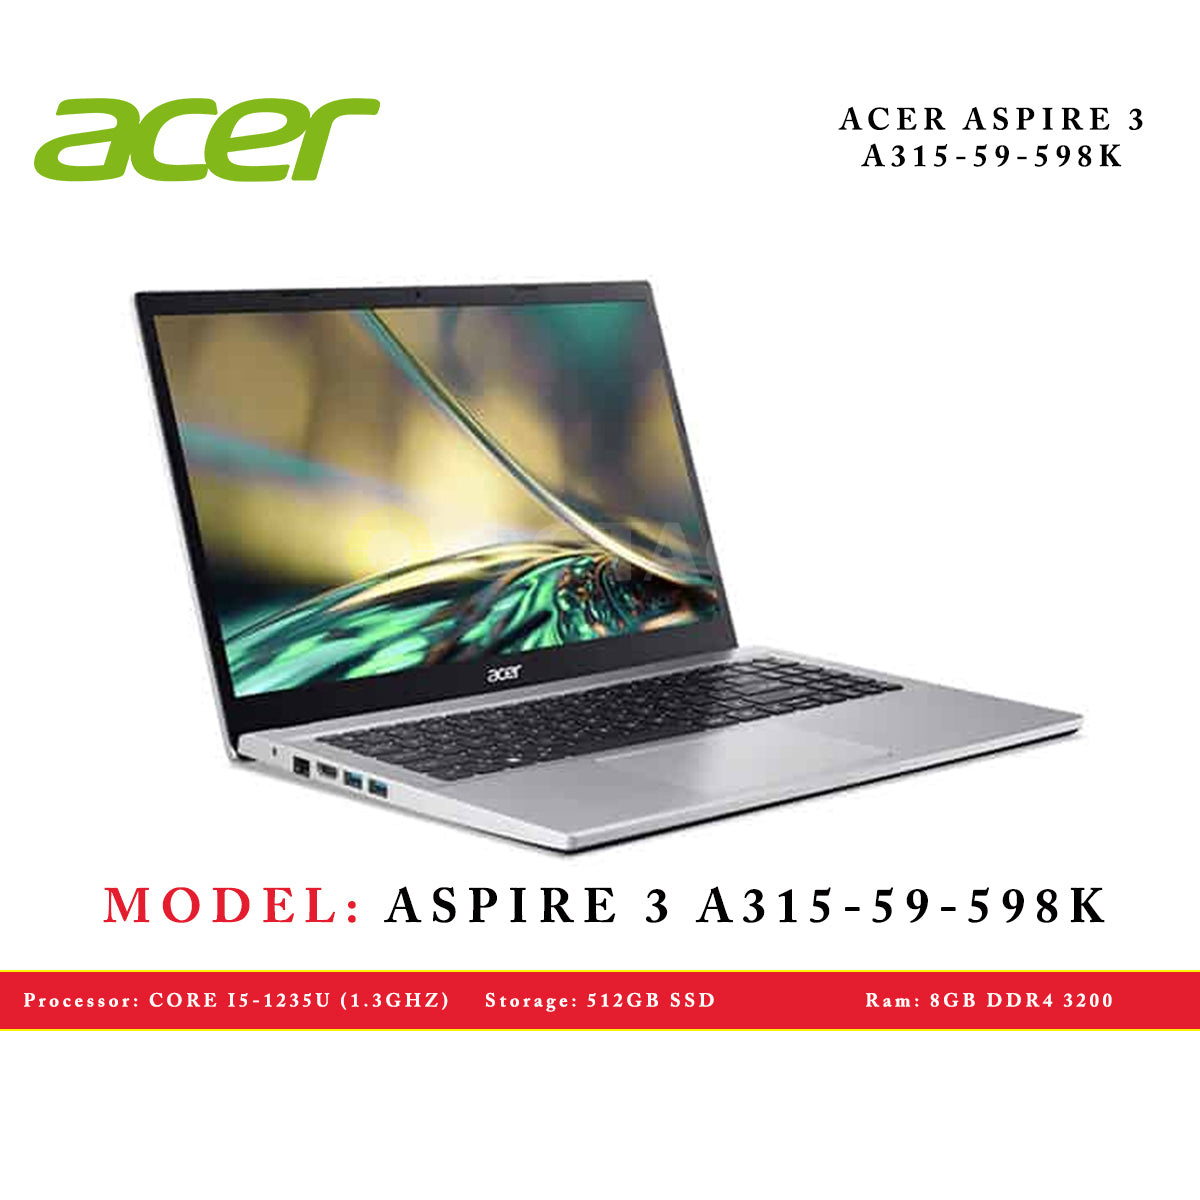 ACER ASPIRE 3 A315-59-598K/ CORE I5